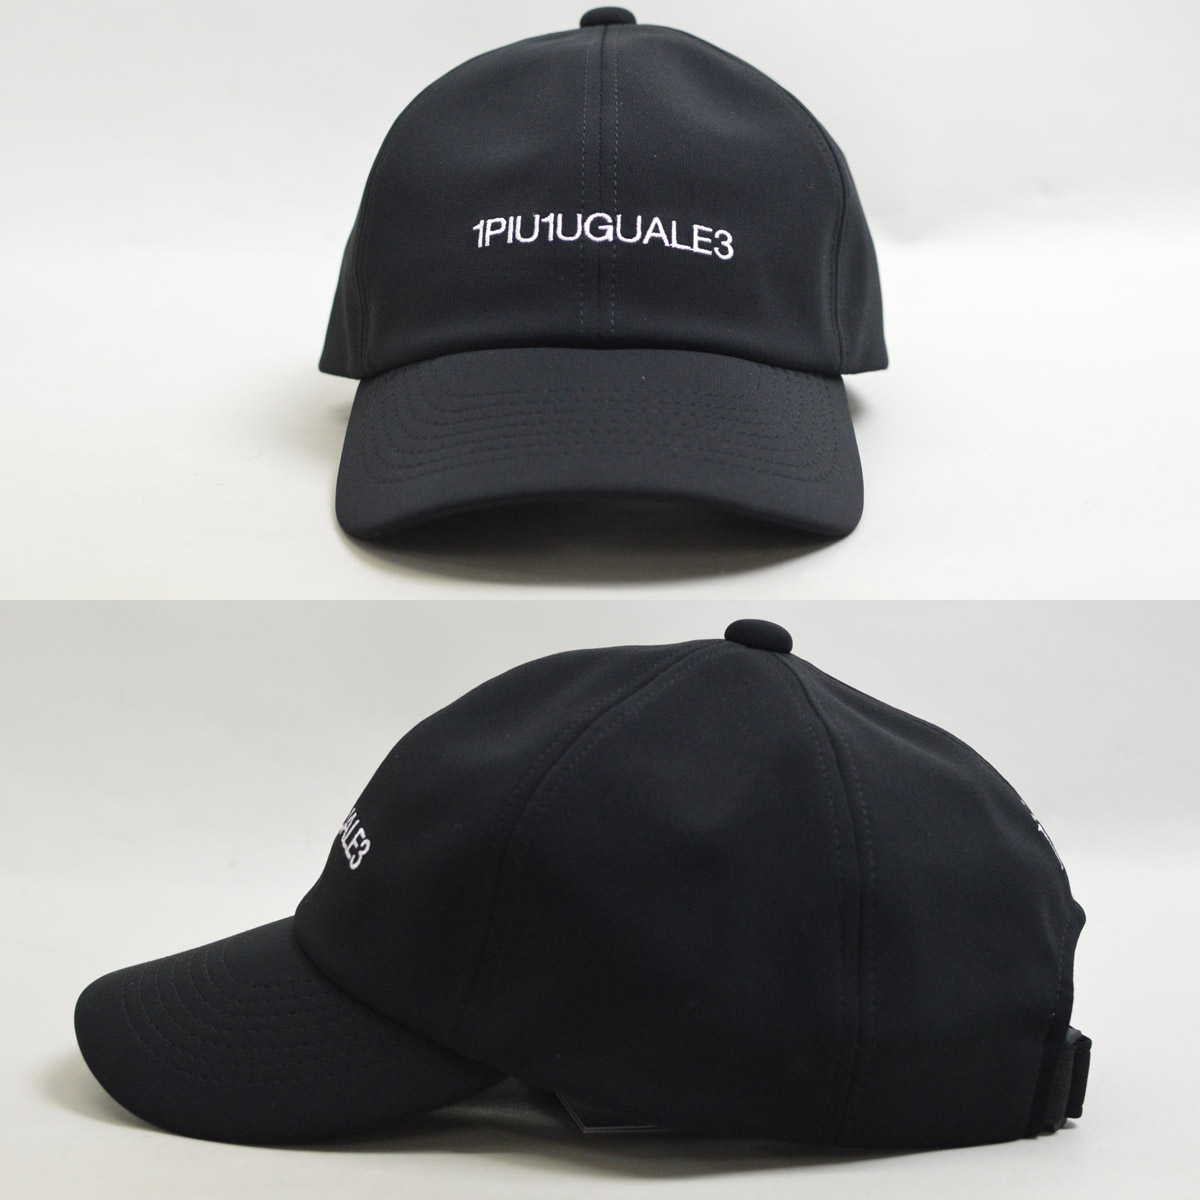 1PIU1UGUALE3 GOLF キャップ帽子 ウノピゥウノウグァーレトレ ゴルフ ゴルフウェア メンズ grg338